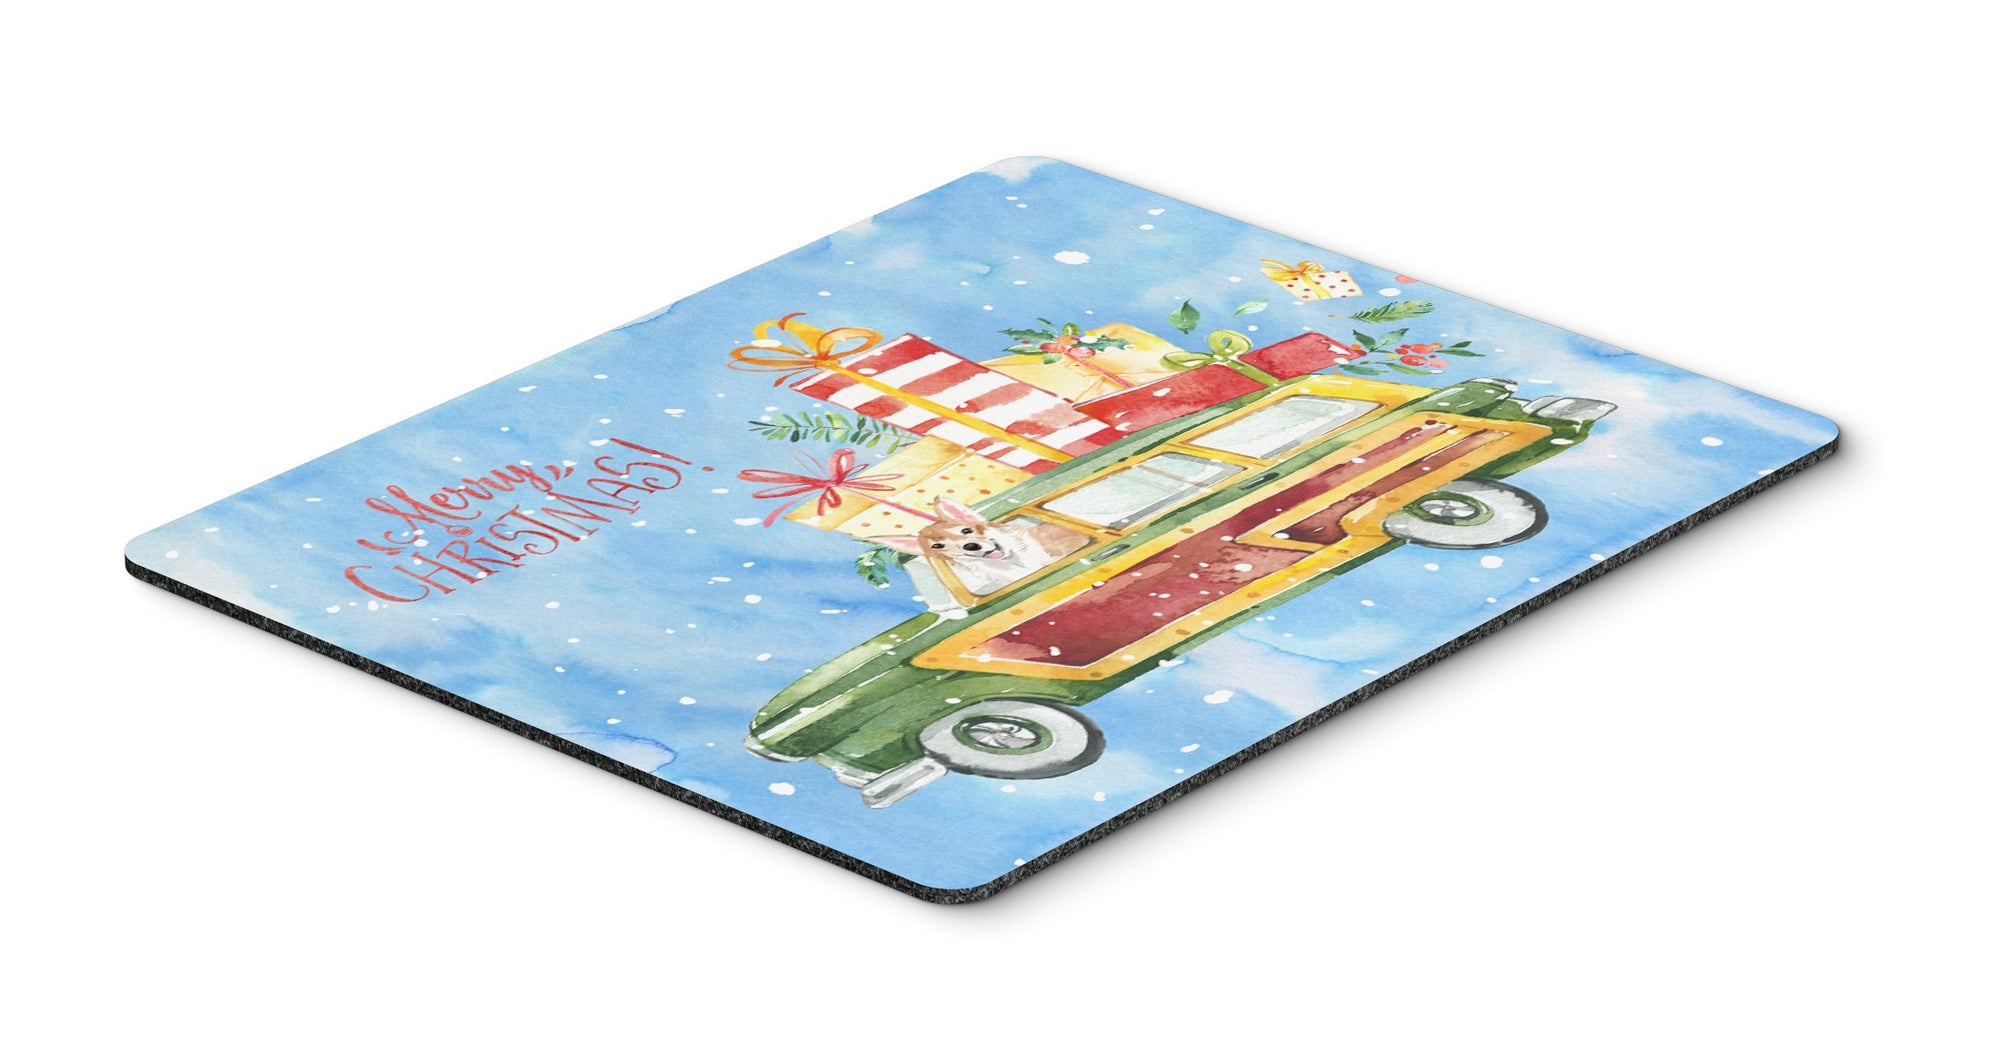 Merry Christmas Corgi Mouse Pad, Hot Pad or Trivet CK2451MP by Caroline's Treasures